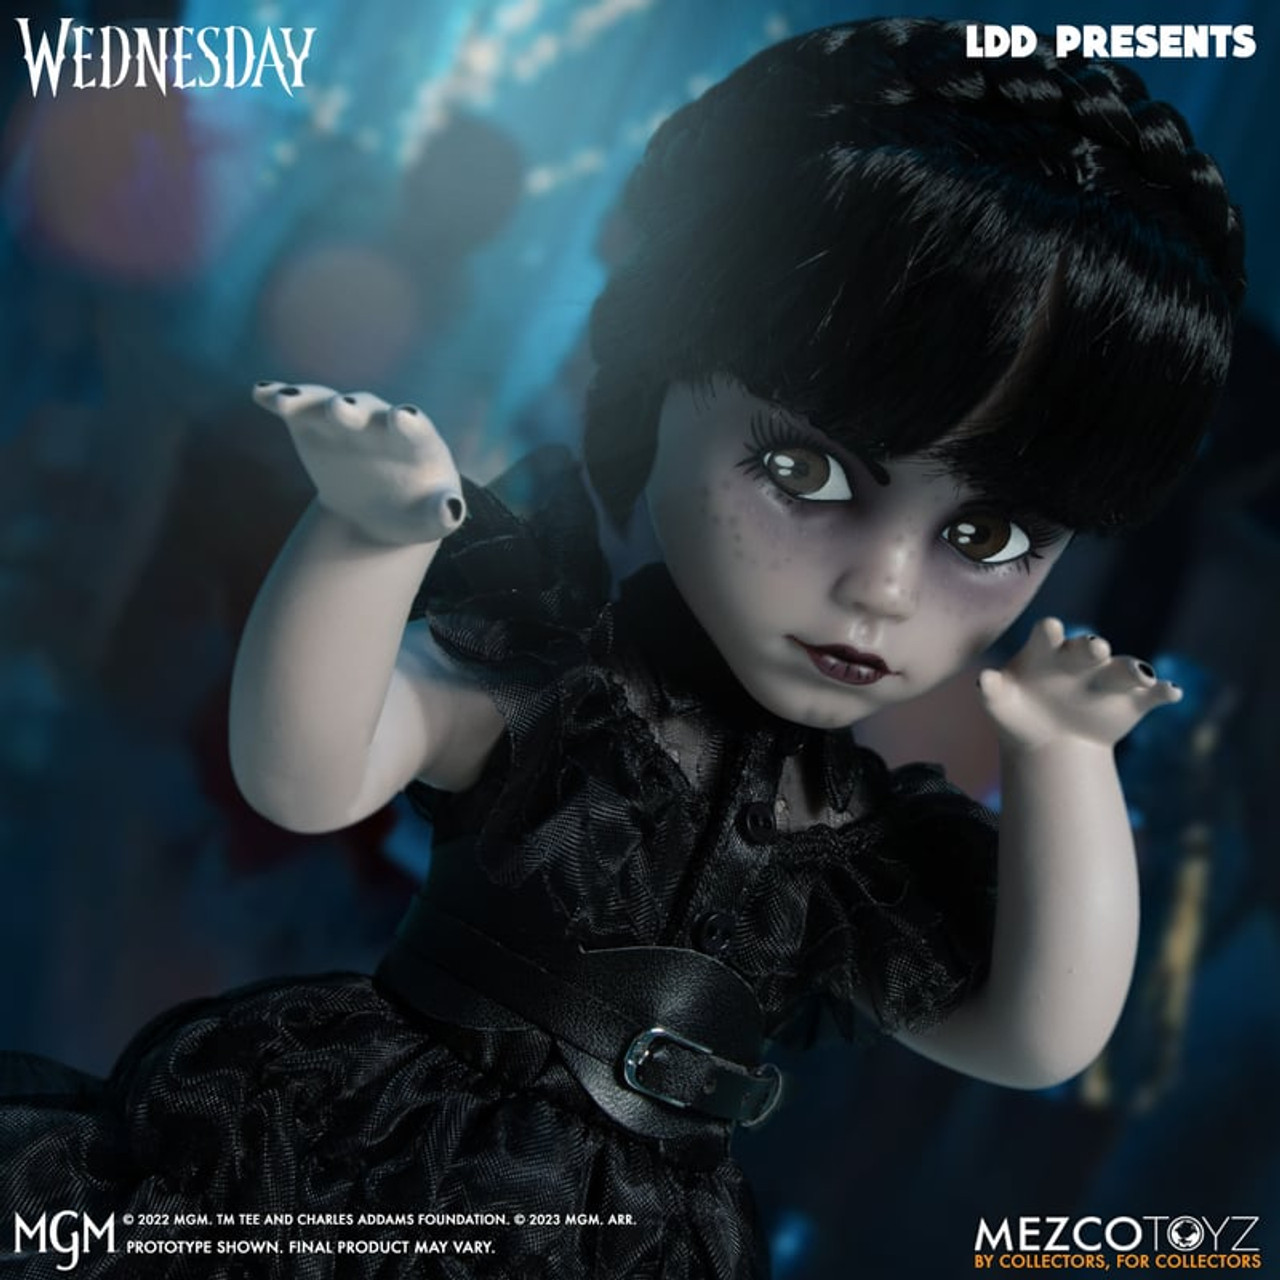 LDD Presents: Dancing Wednesday Addams